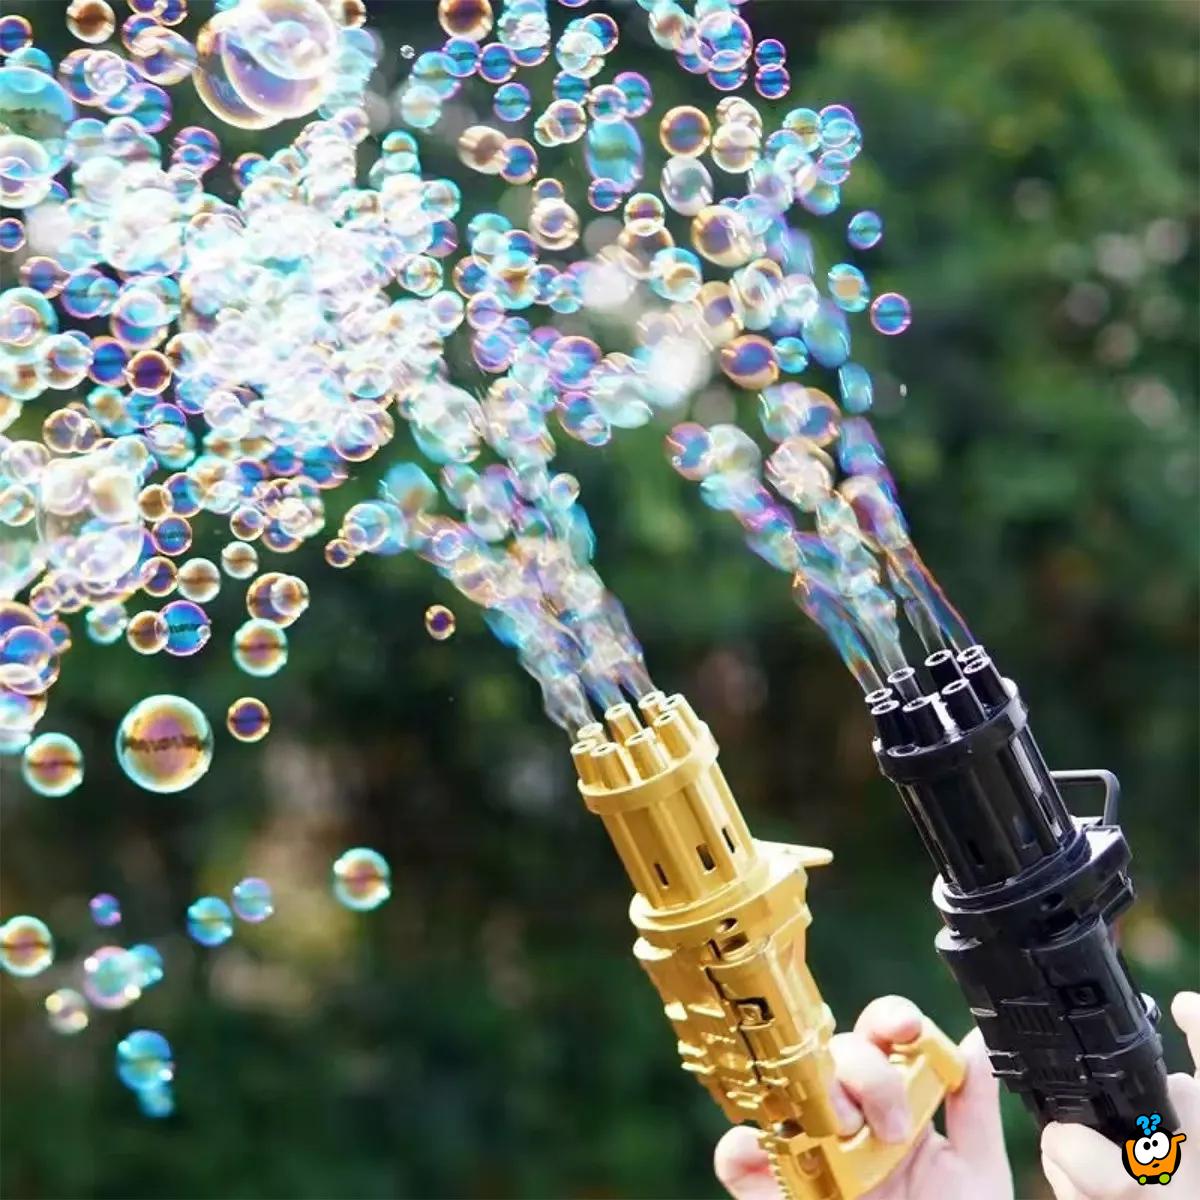 Bubble Gun - Napravi 100 mehurića u sekundi